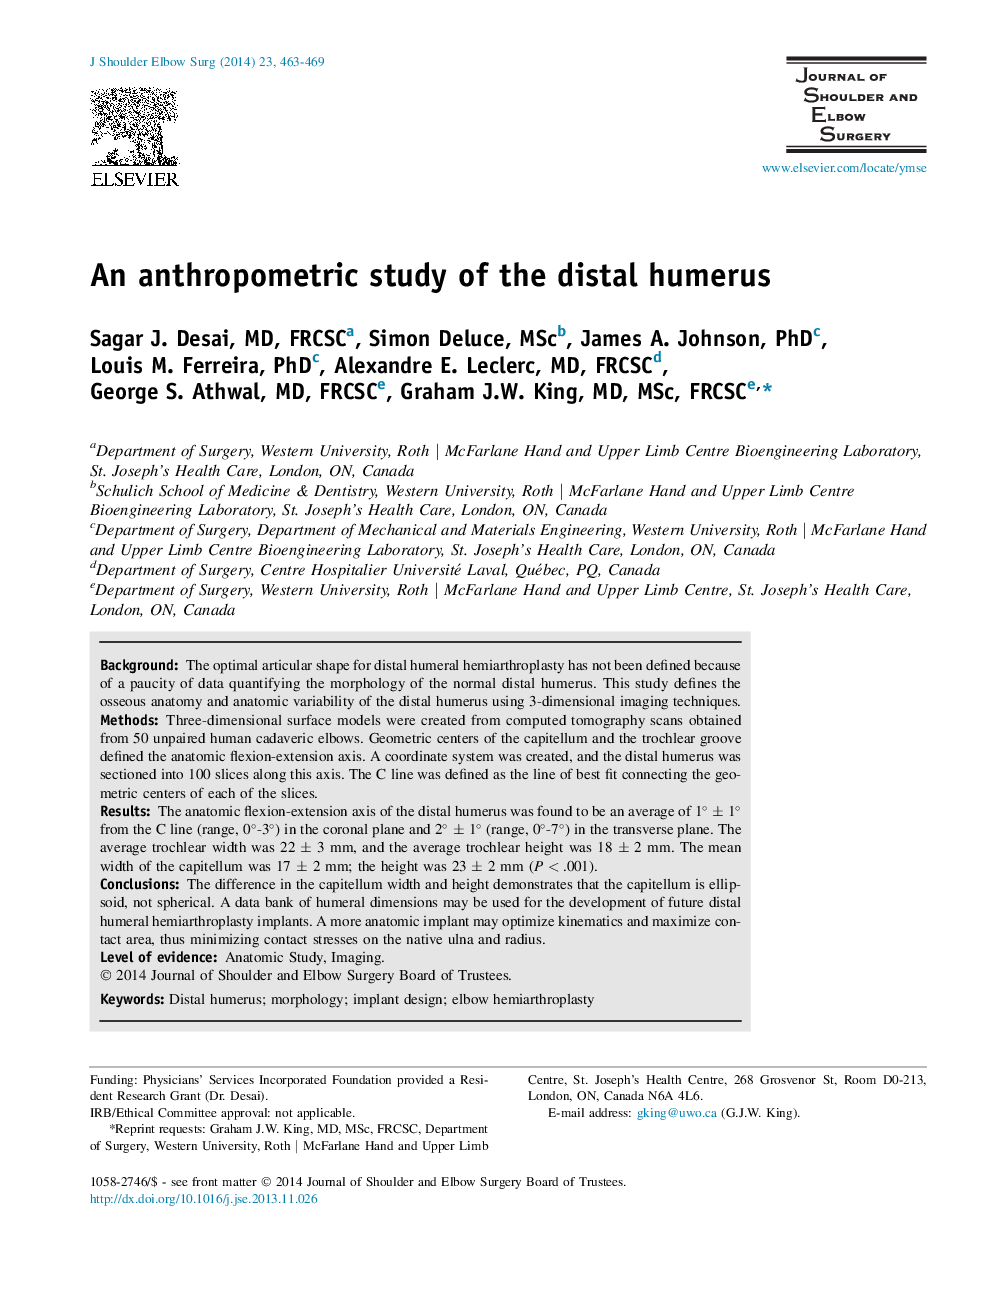 Basic ScienceAn anthropometric study of the distal humerus